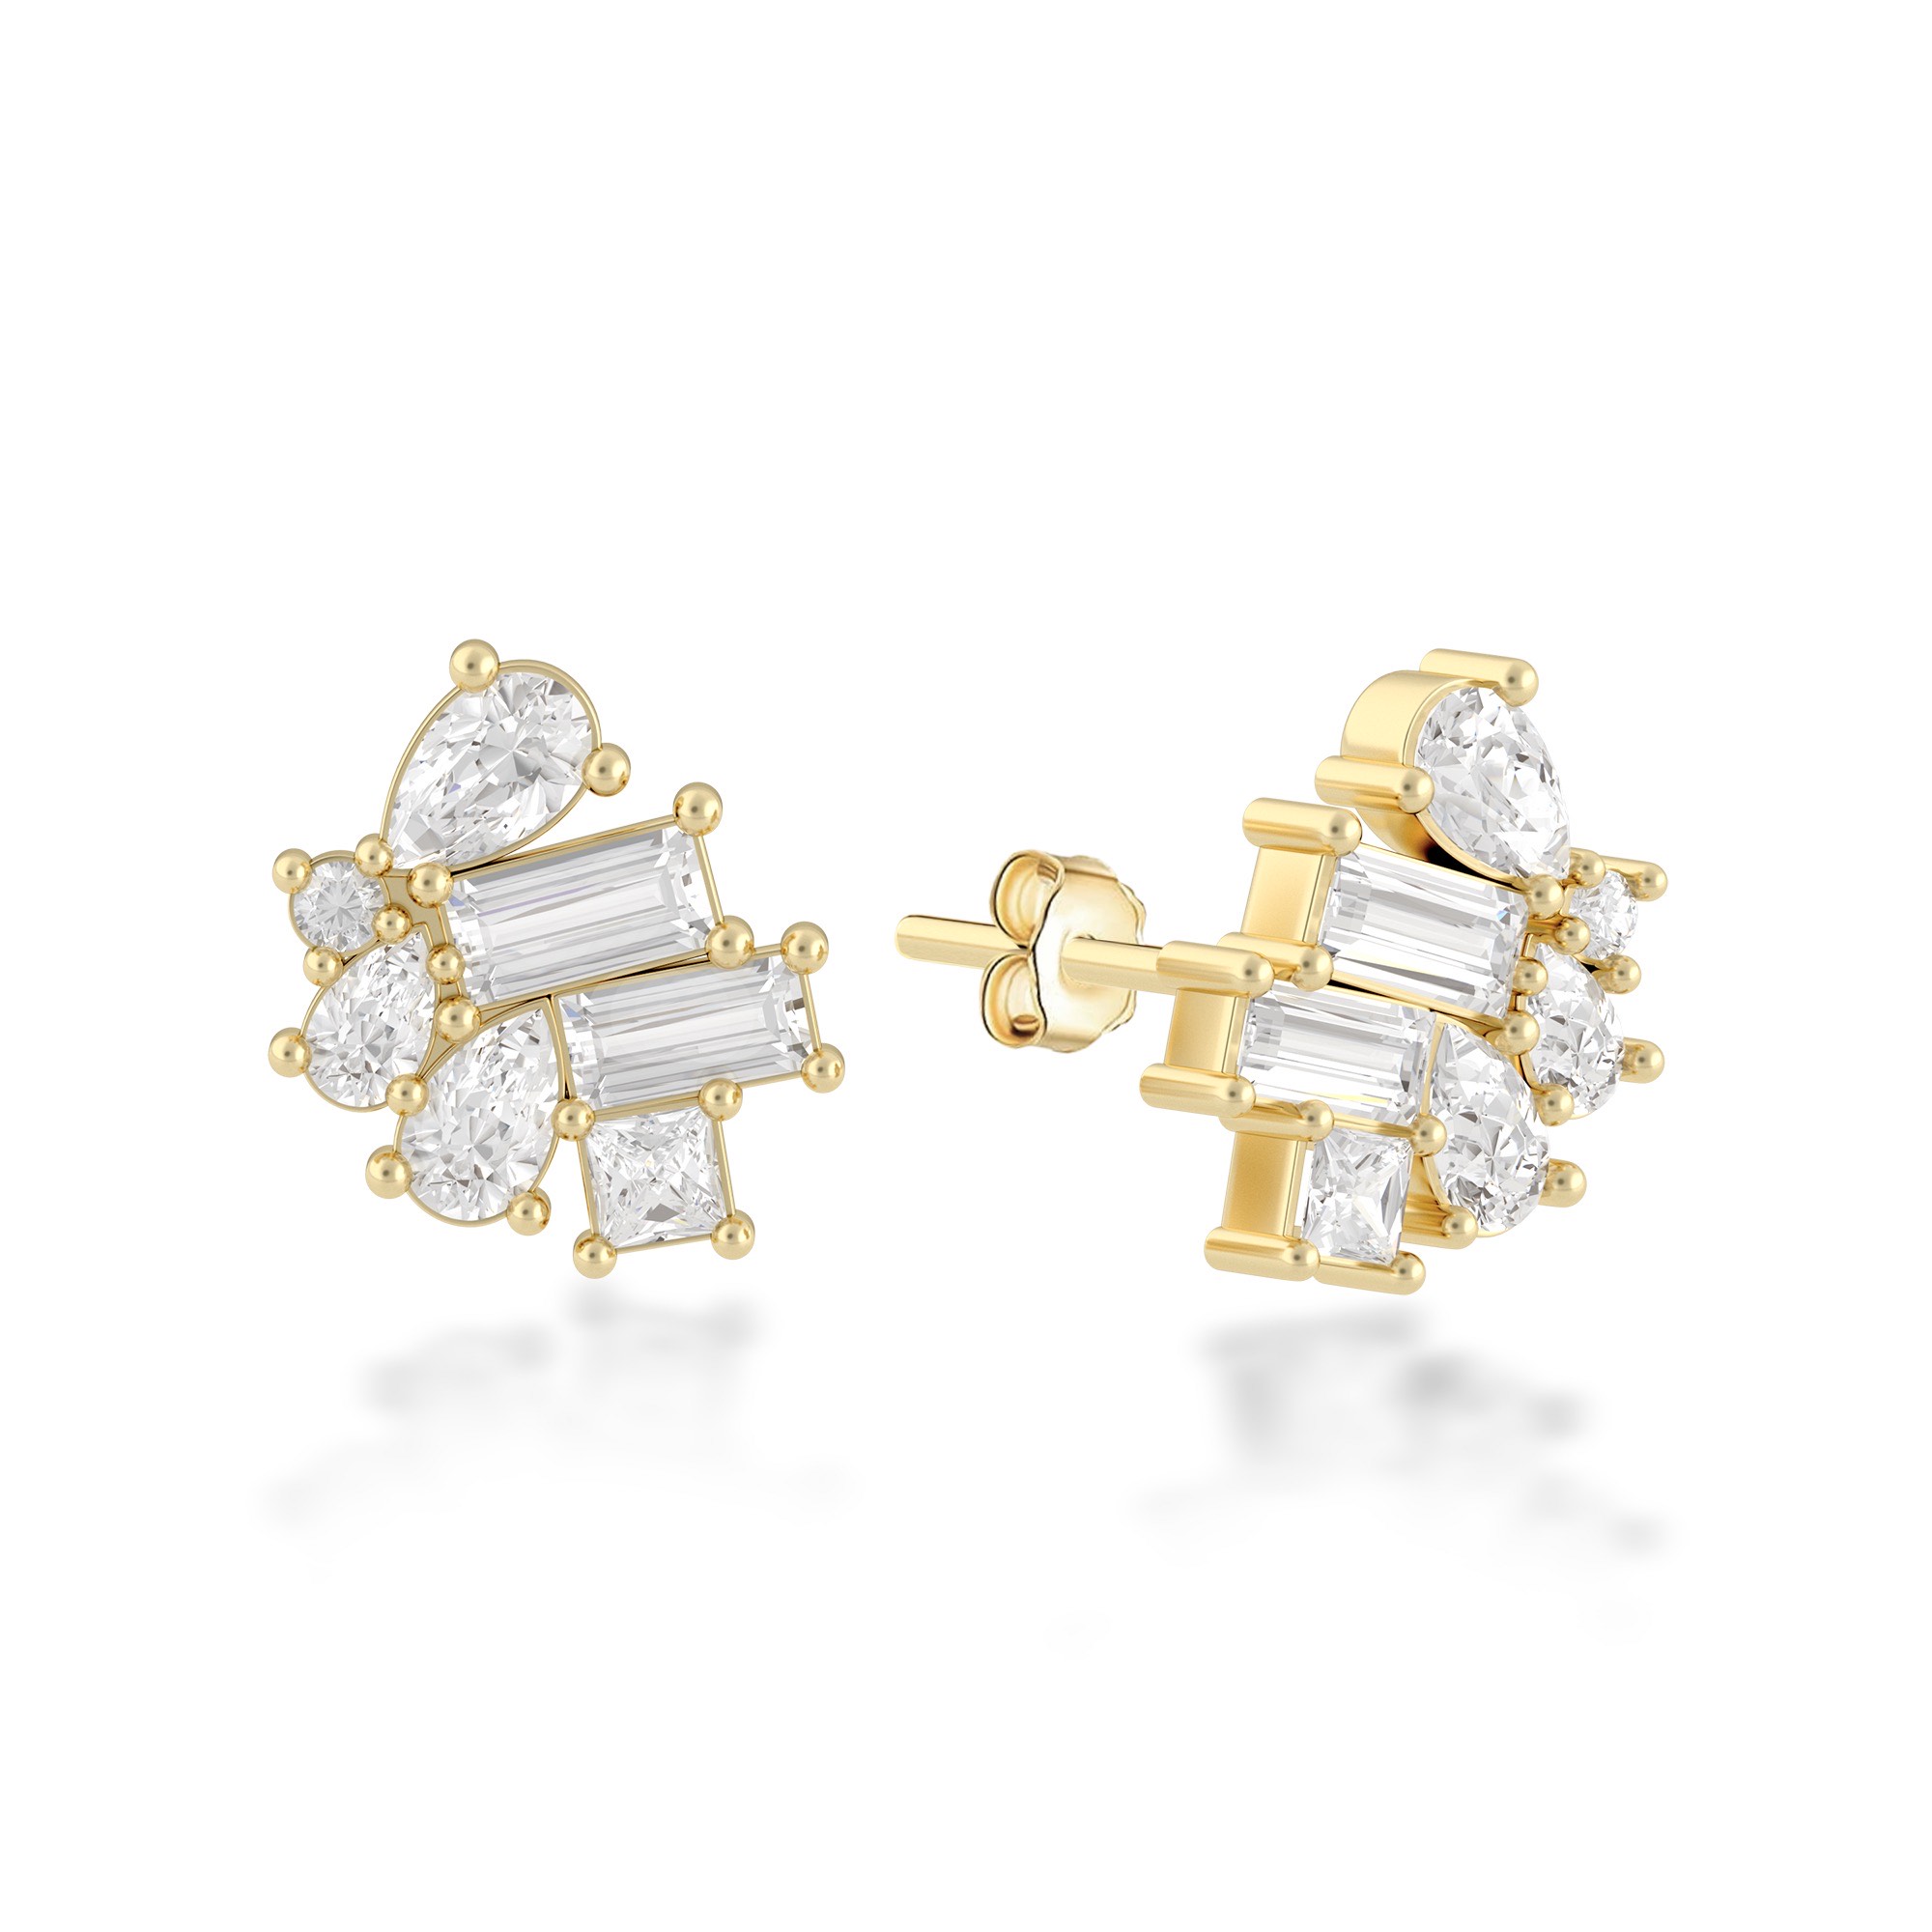 gemist dorian webb diamond jewelry trellis earring